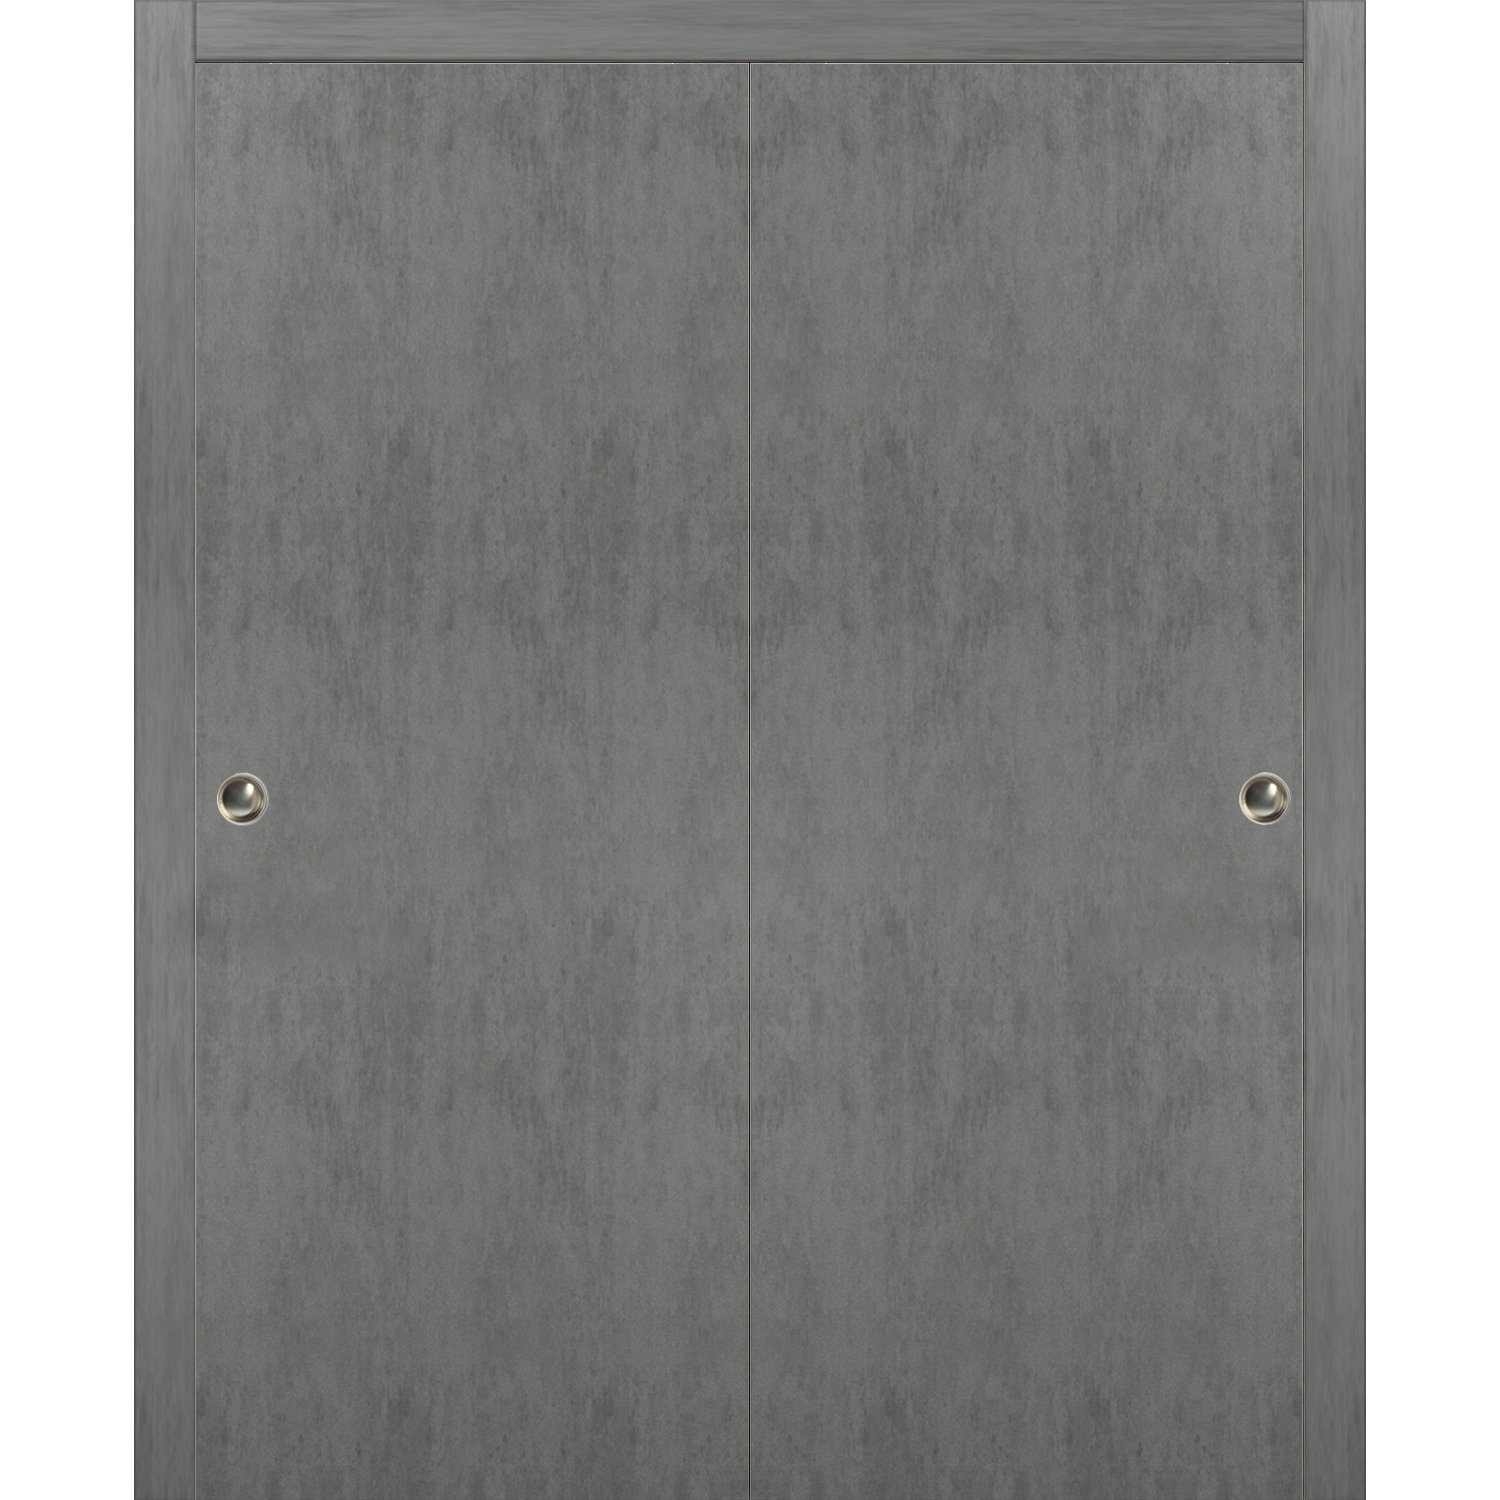 Sliding Closet Bypass Doors 36 x 84 inches | Planum 0010 Concrete | Sturdy Top Mount Rails Moldings Trims Hardware Set | Wood Solid Bedroom Wardrobe Doors - image 1 of 3